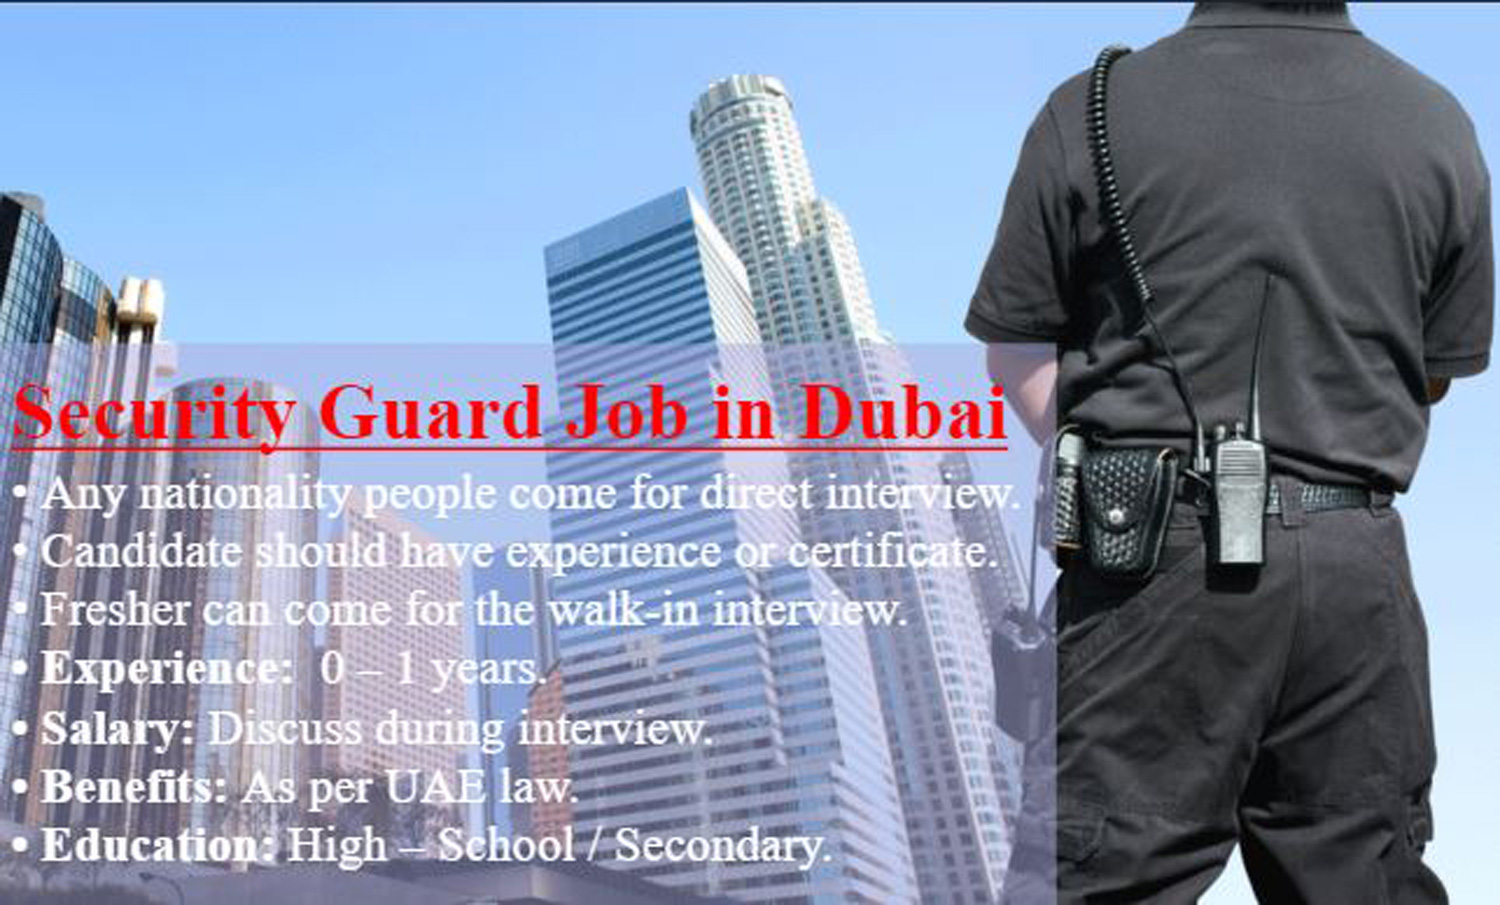 Security Guard Jobs in UAE 2018